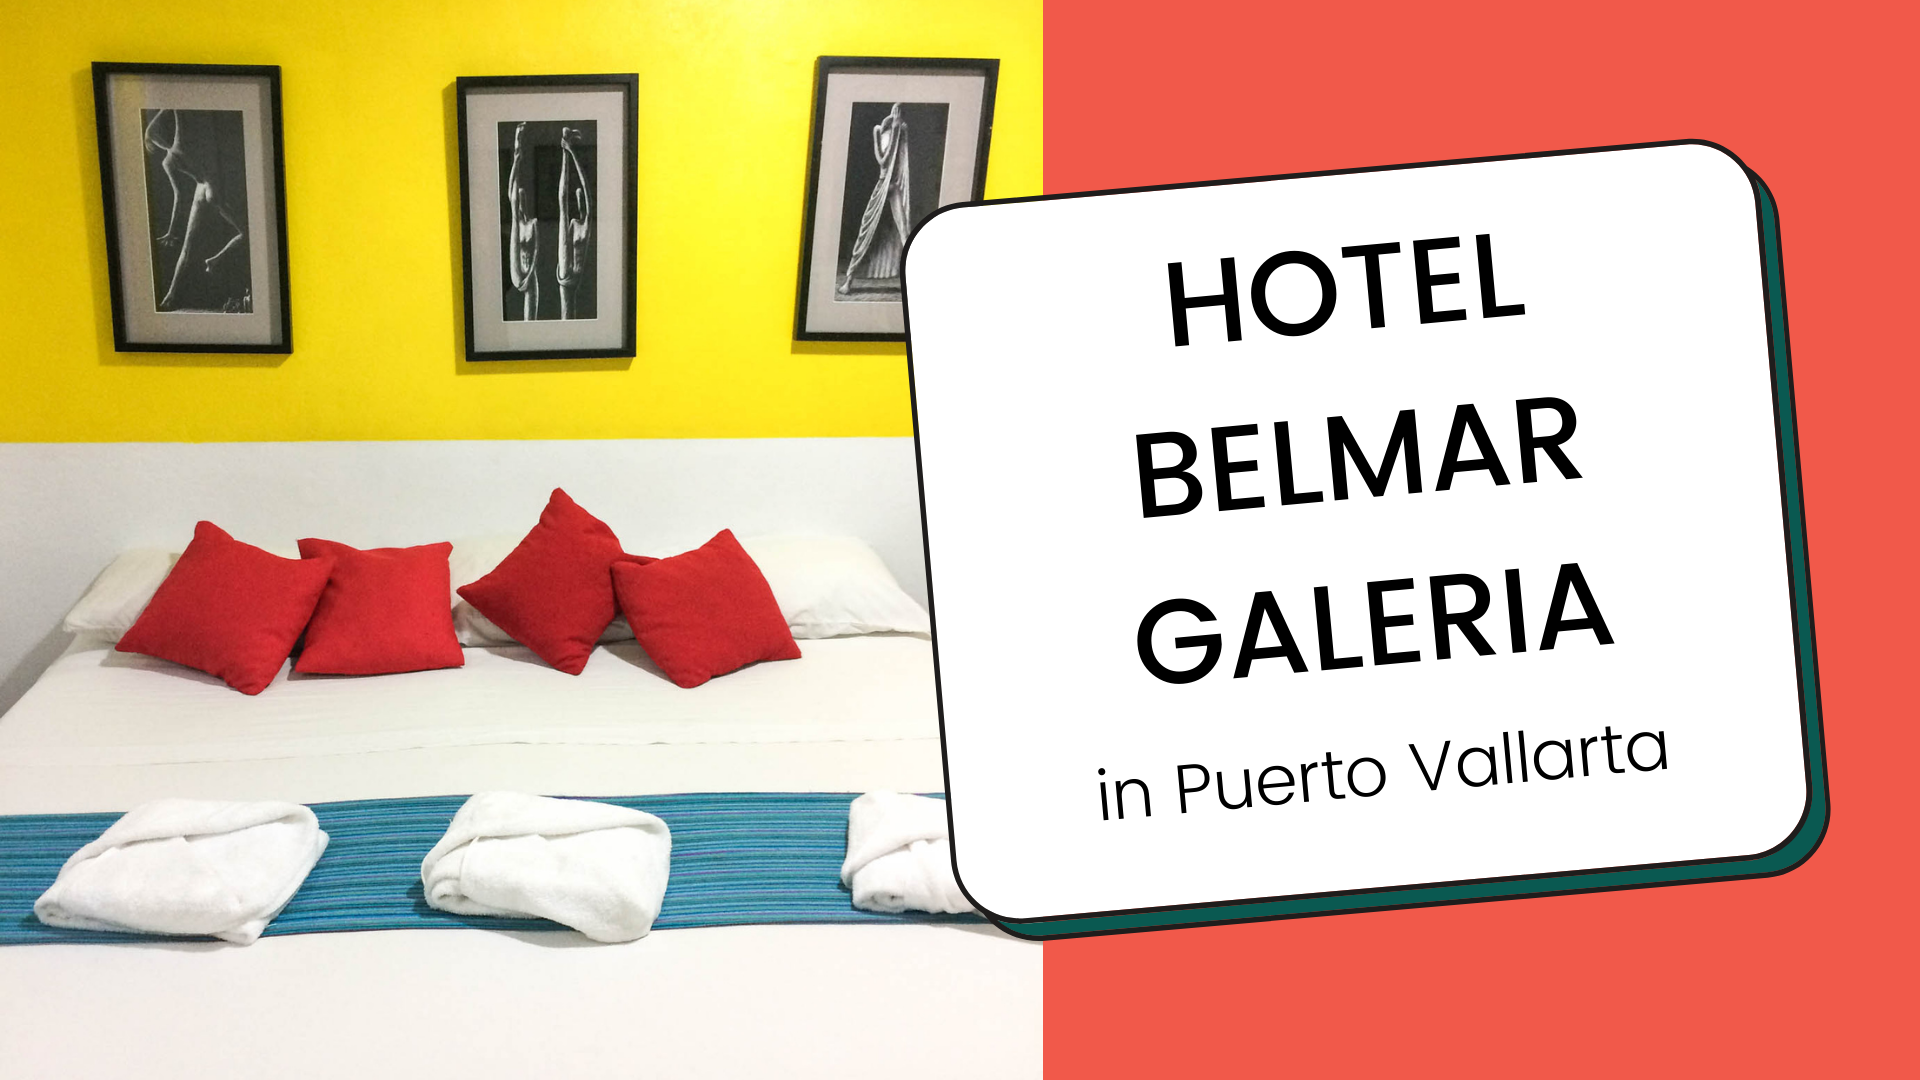 Hotel Belmar Galeria Review in Puerto Vallarta